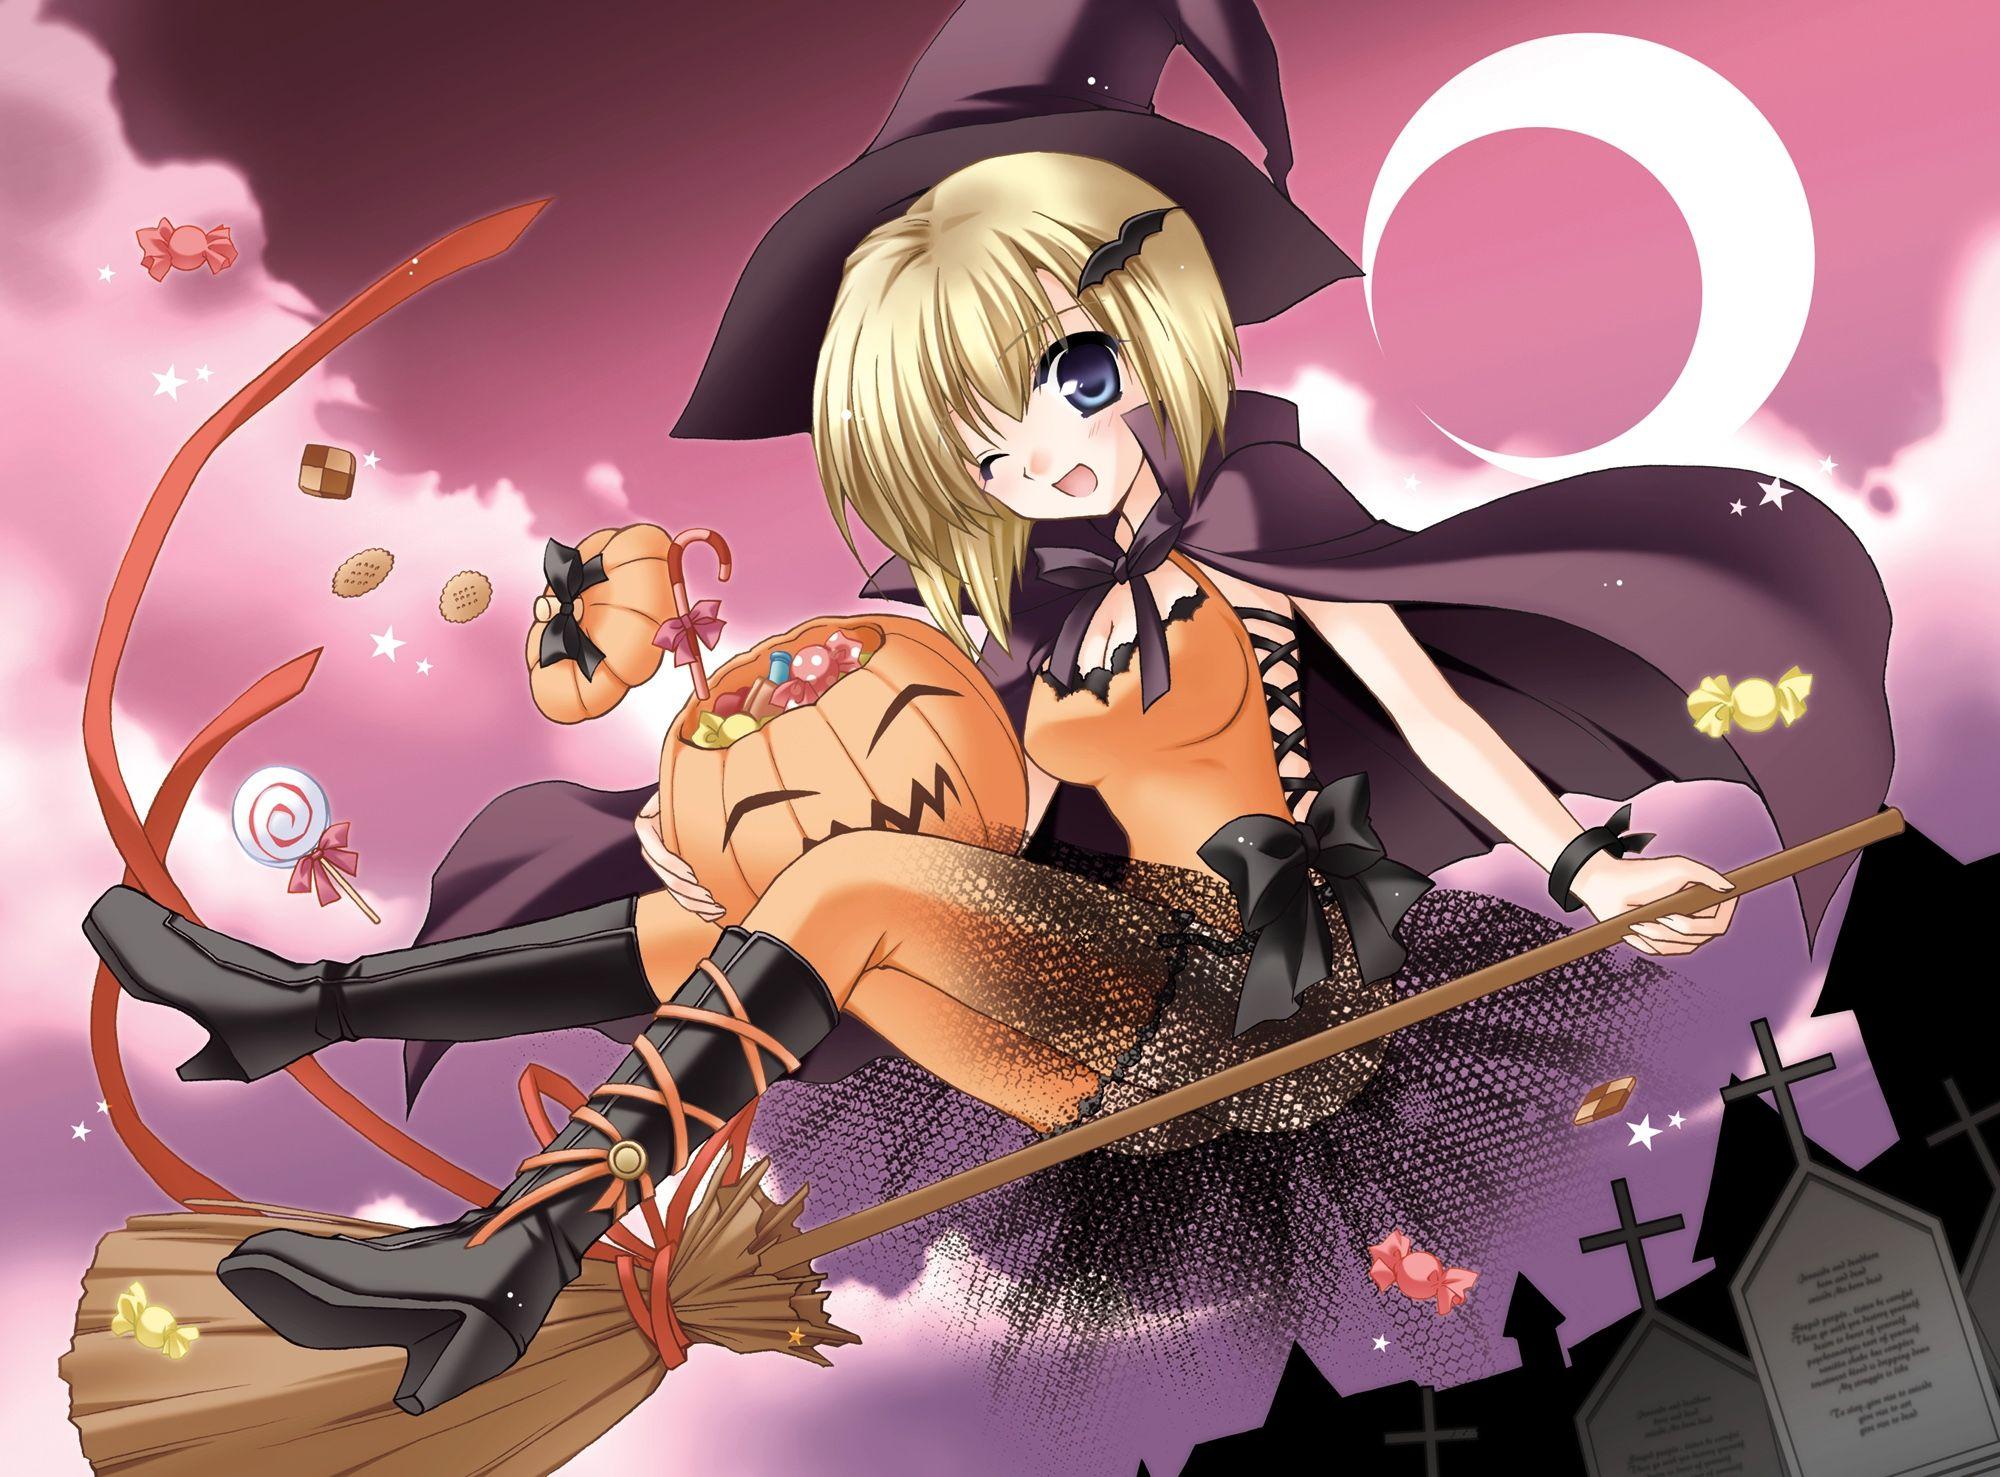 103 Anime Halloween